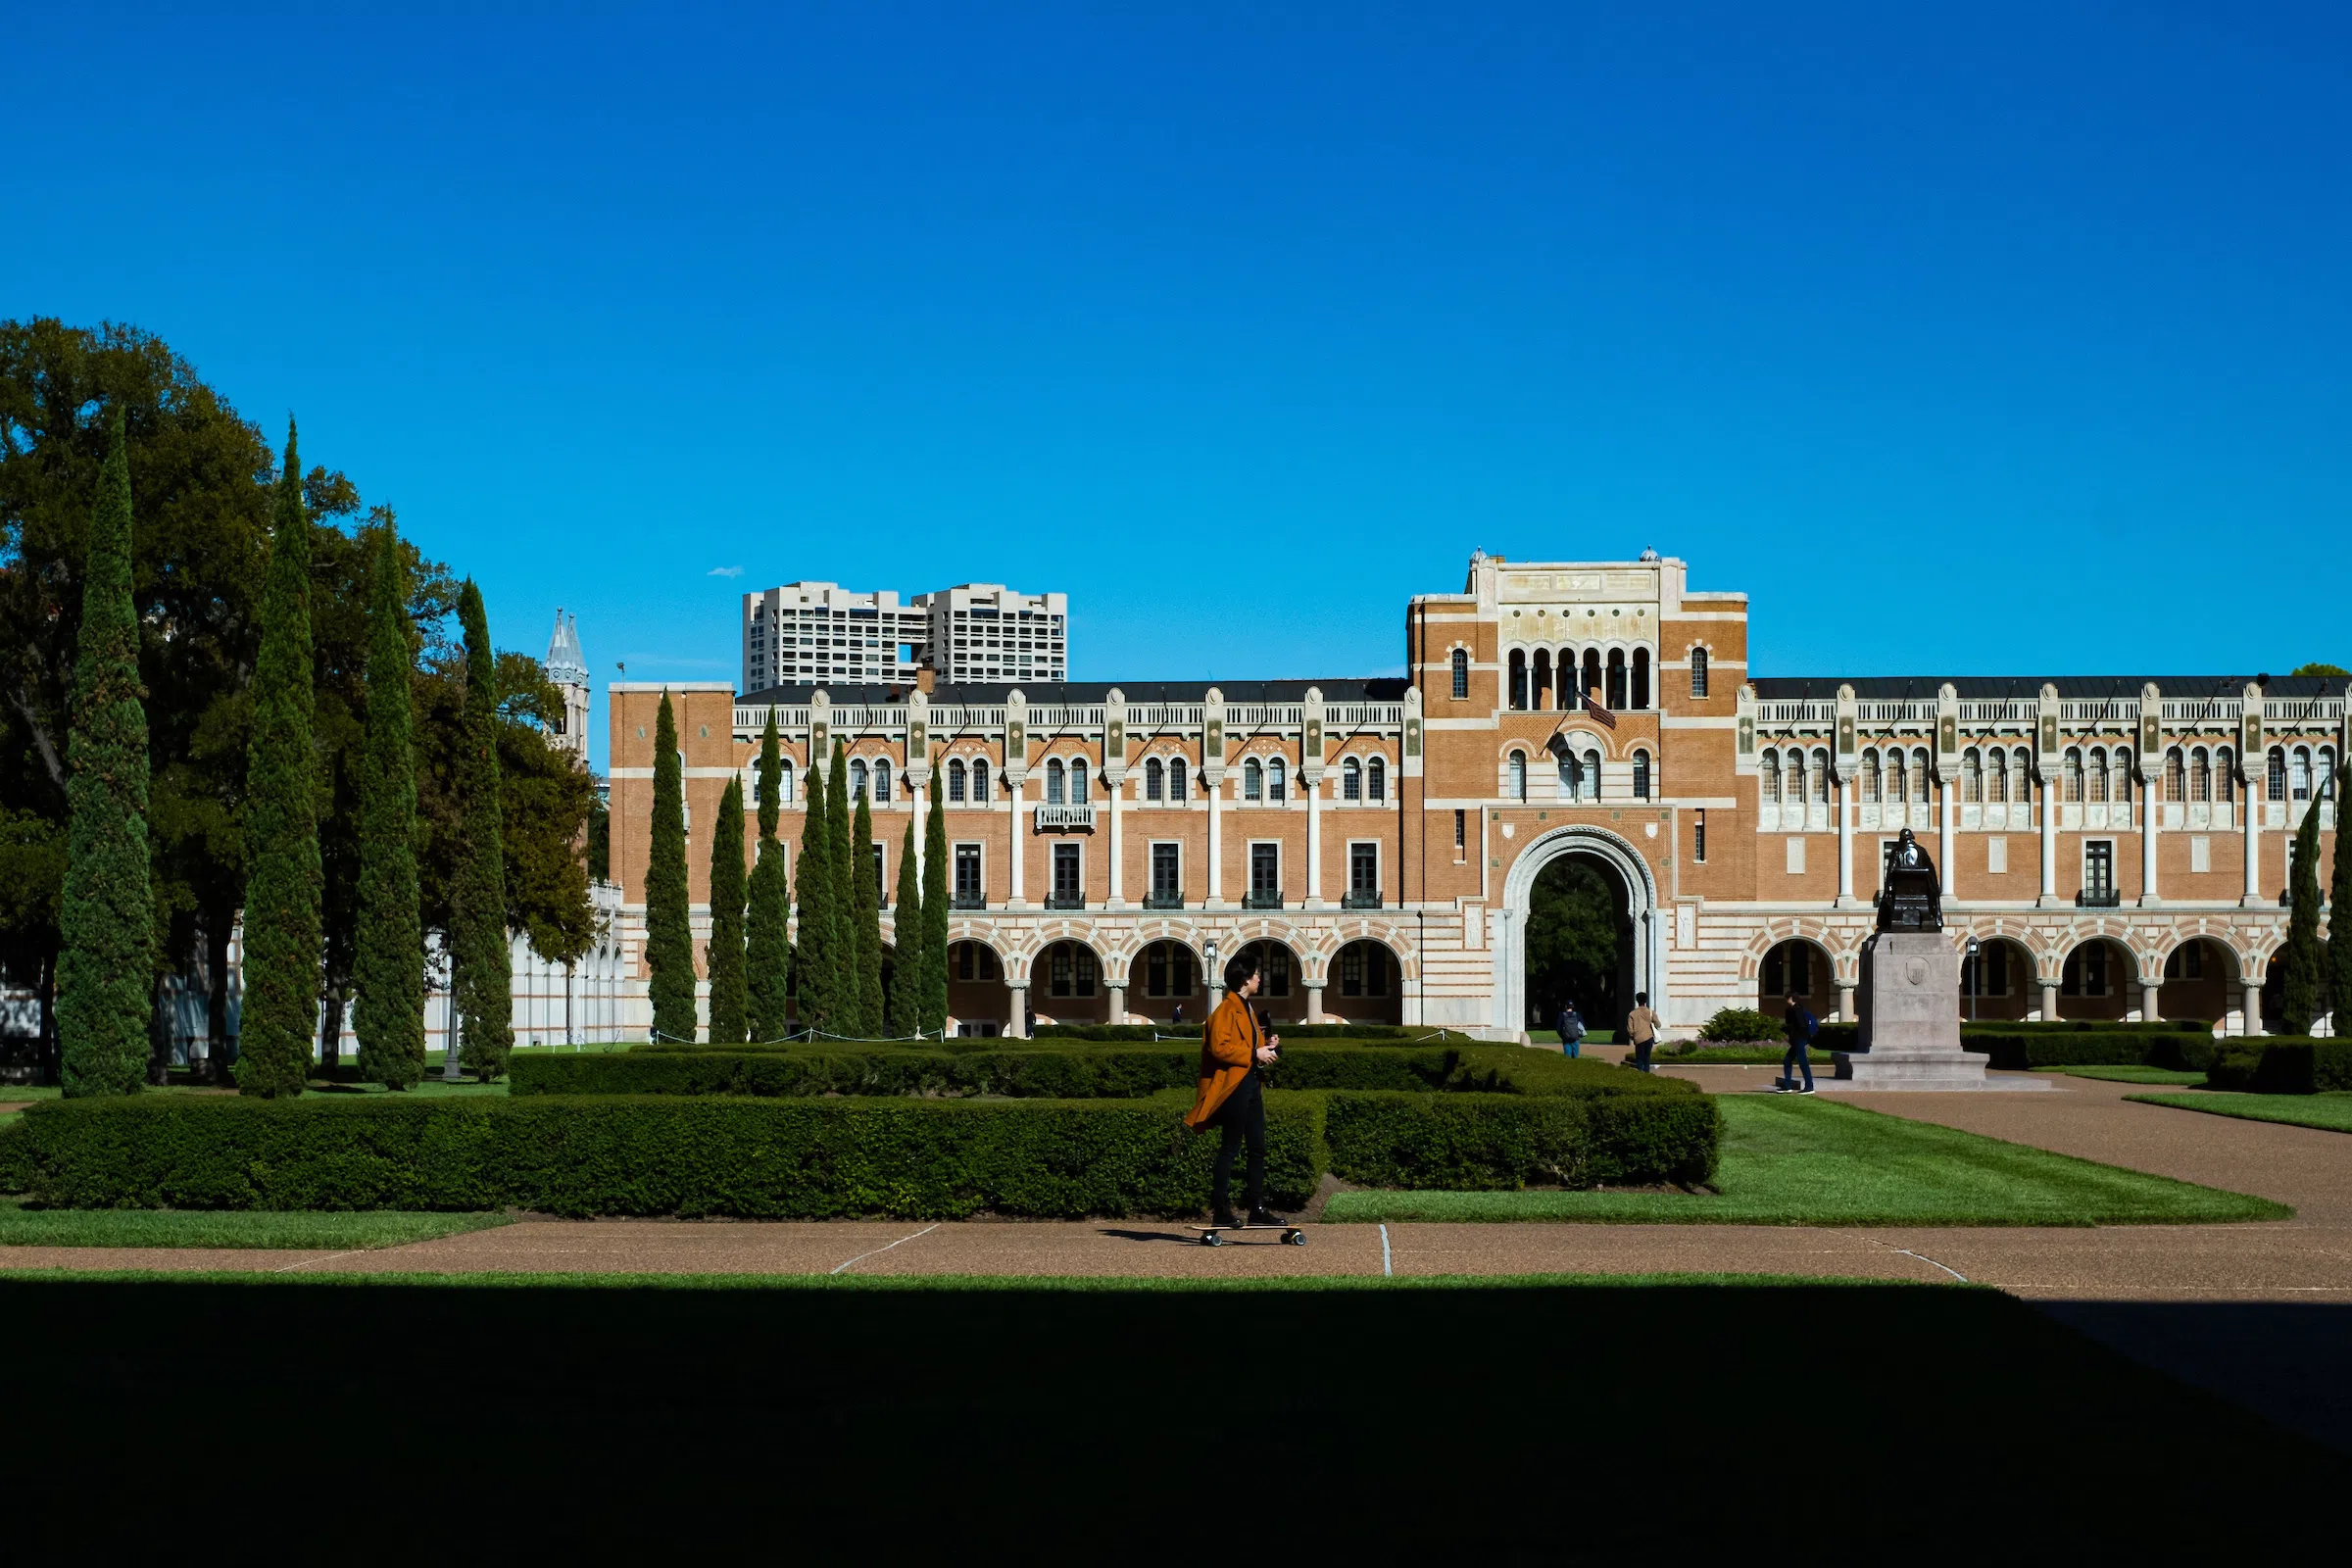 Rice University's Lovett Hall and Academic Quad